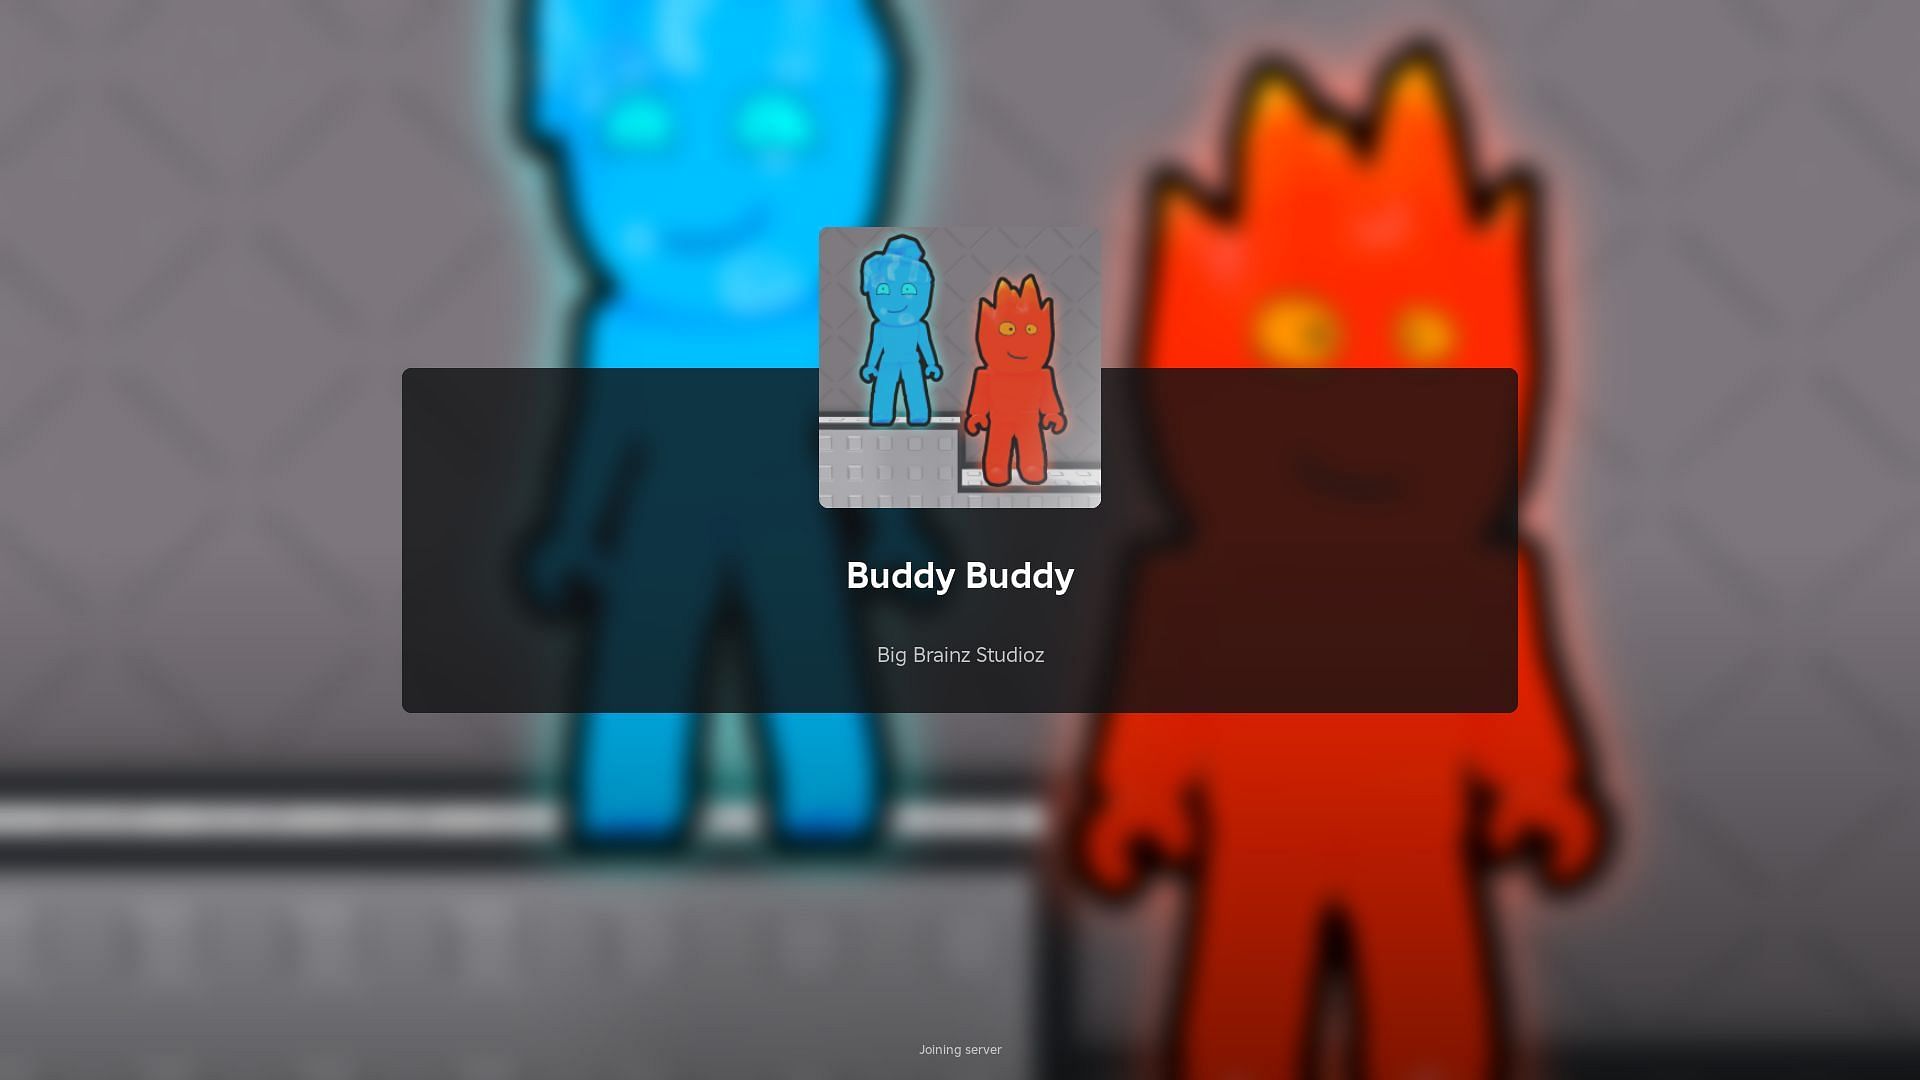 How to play Buddy Buddy?